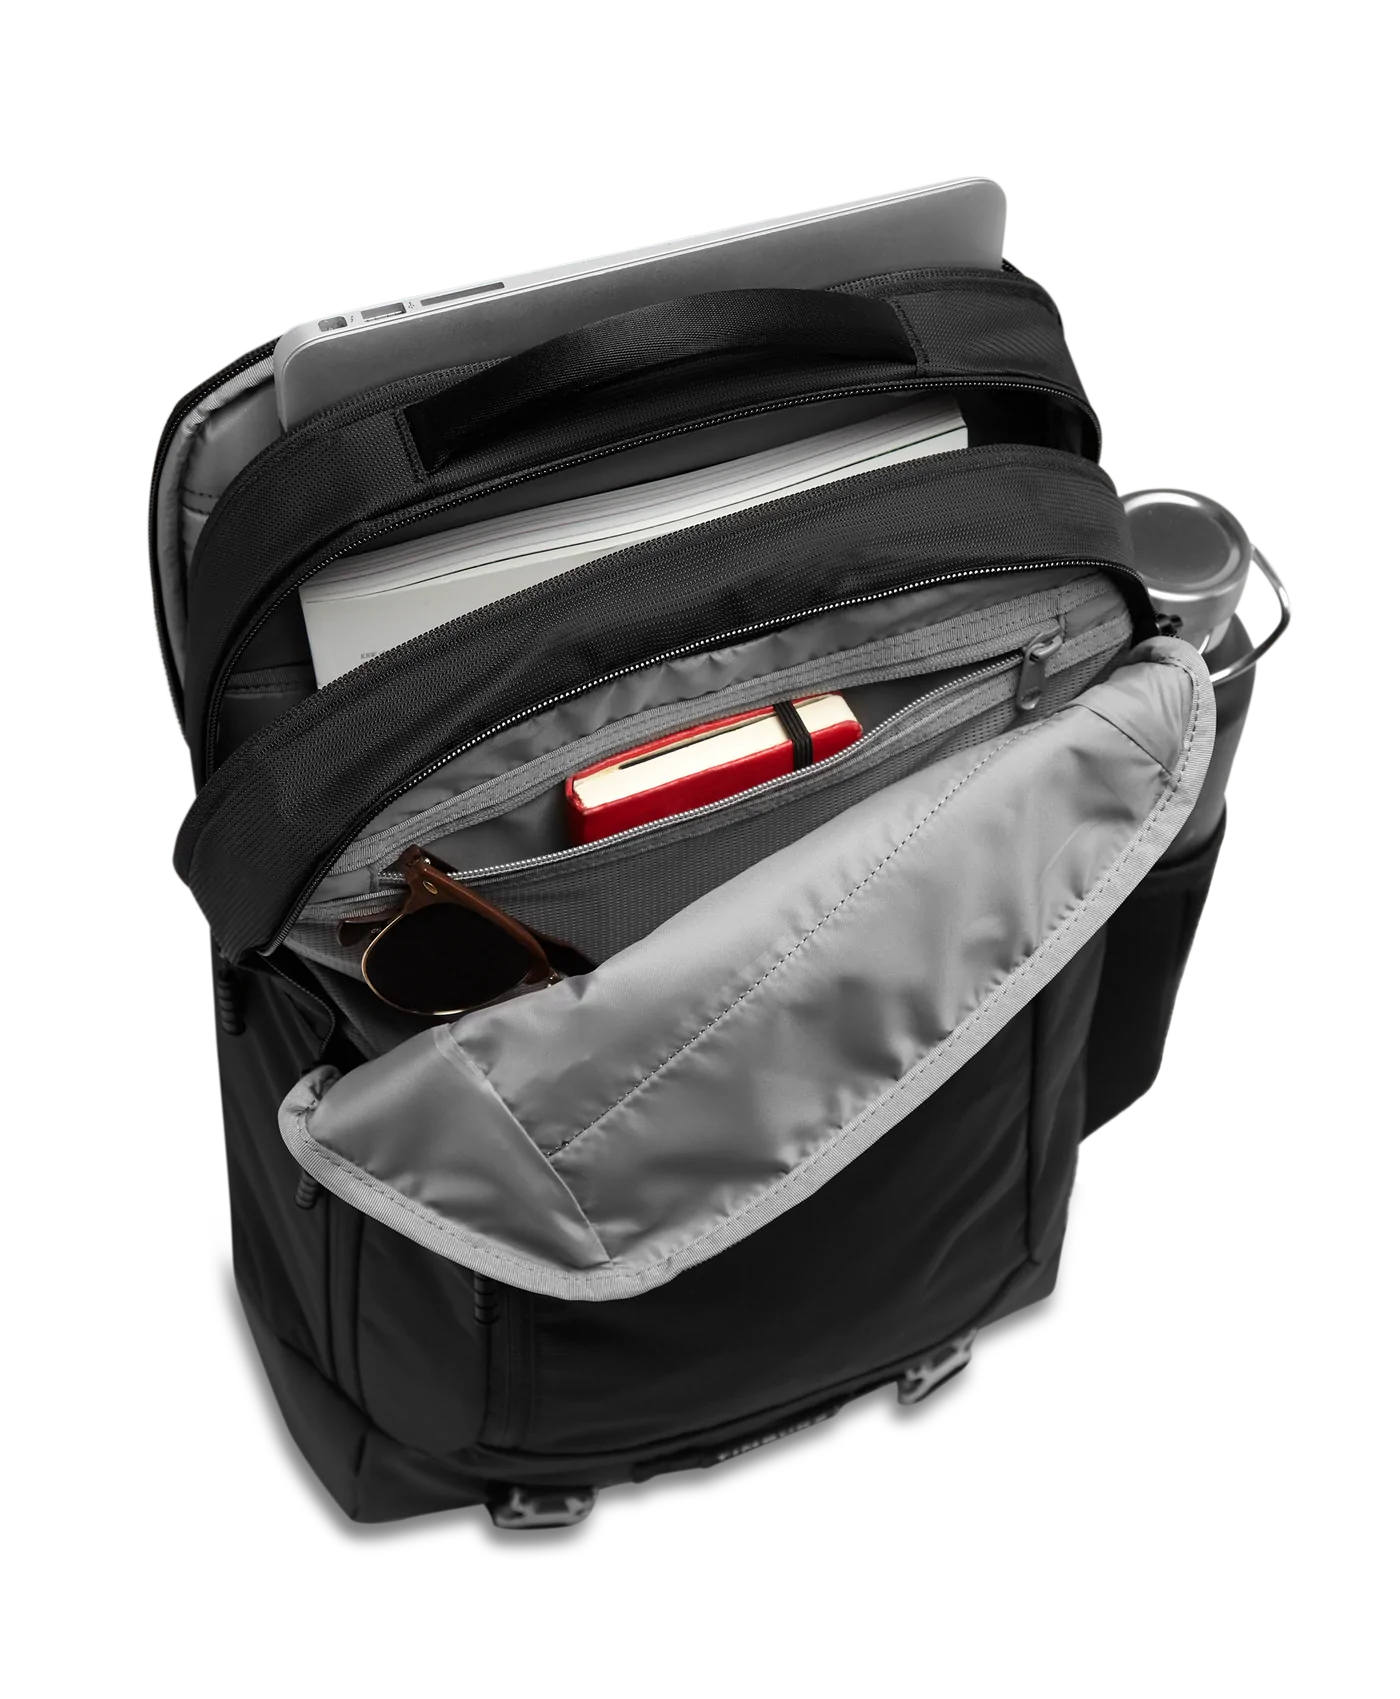 Timbuk2 Authority Custom 17 inch Laptop Backpacks, Black Deluxe